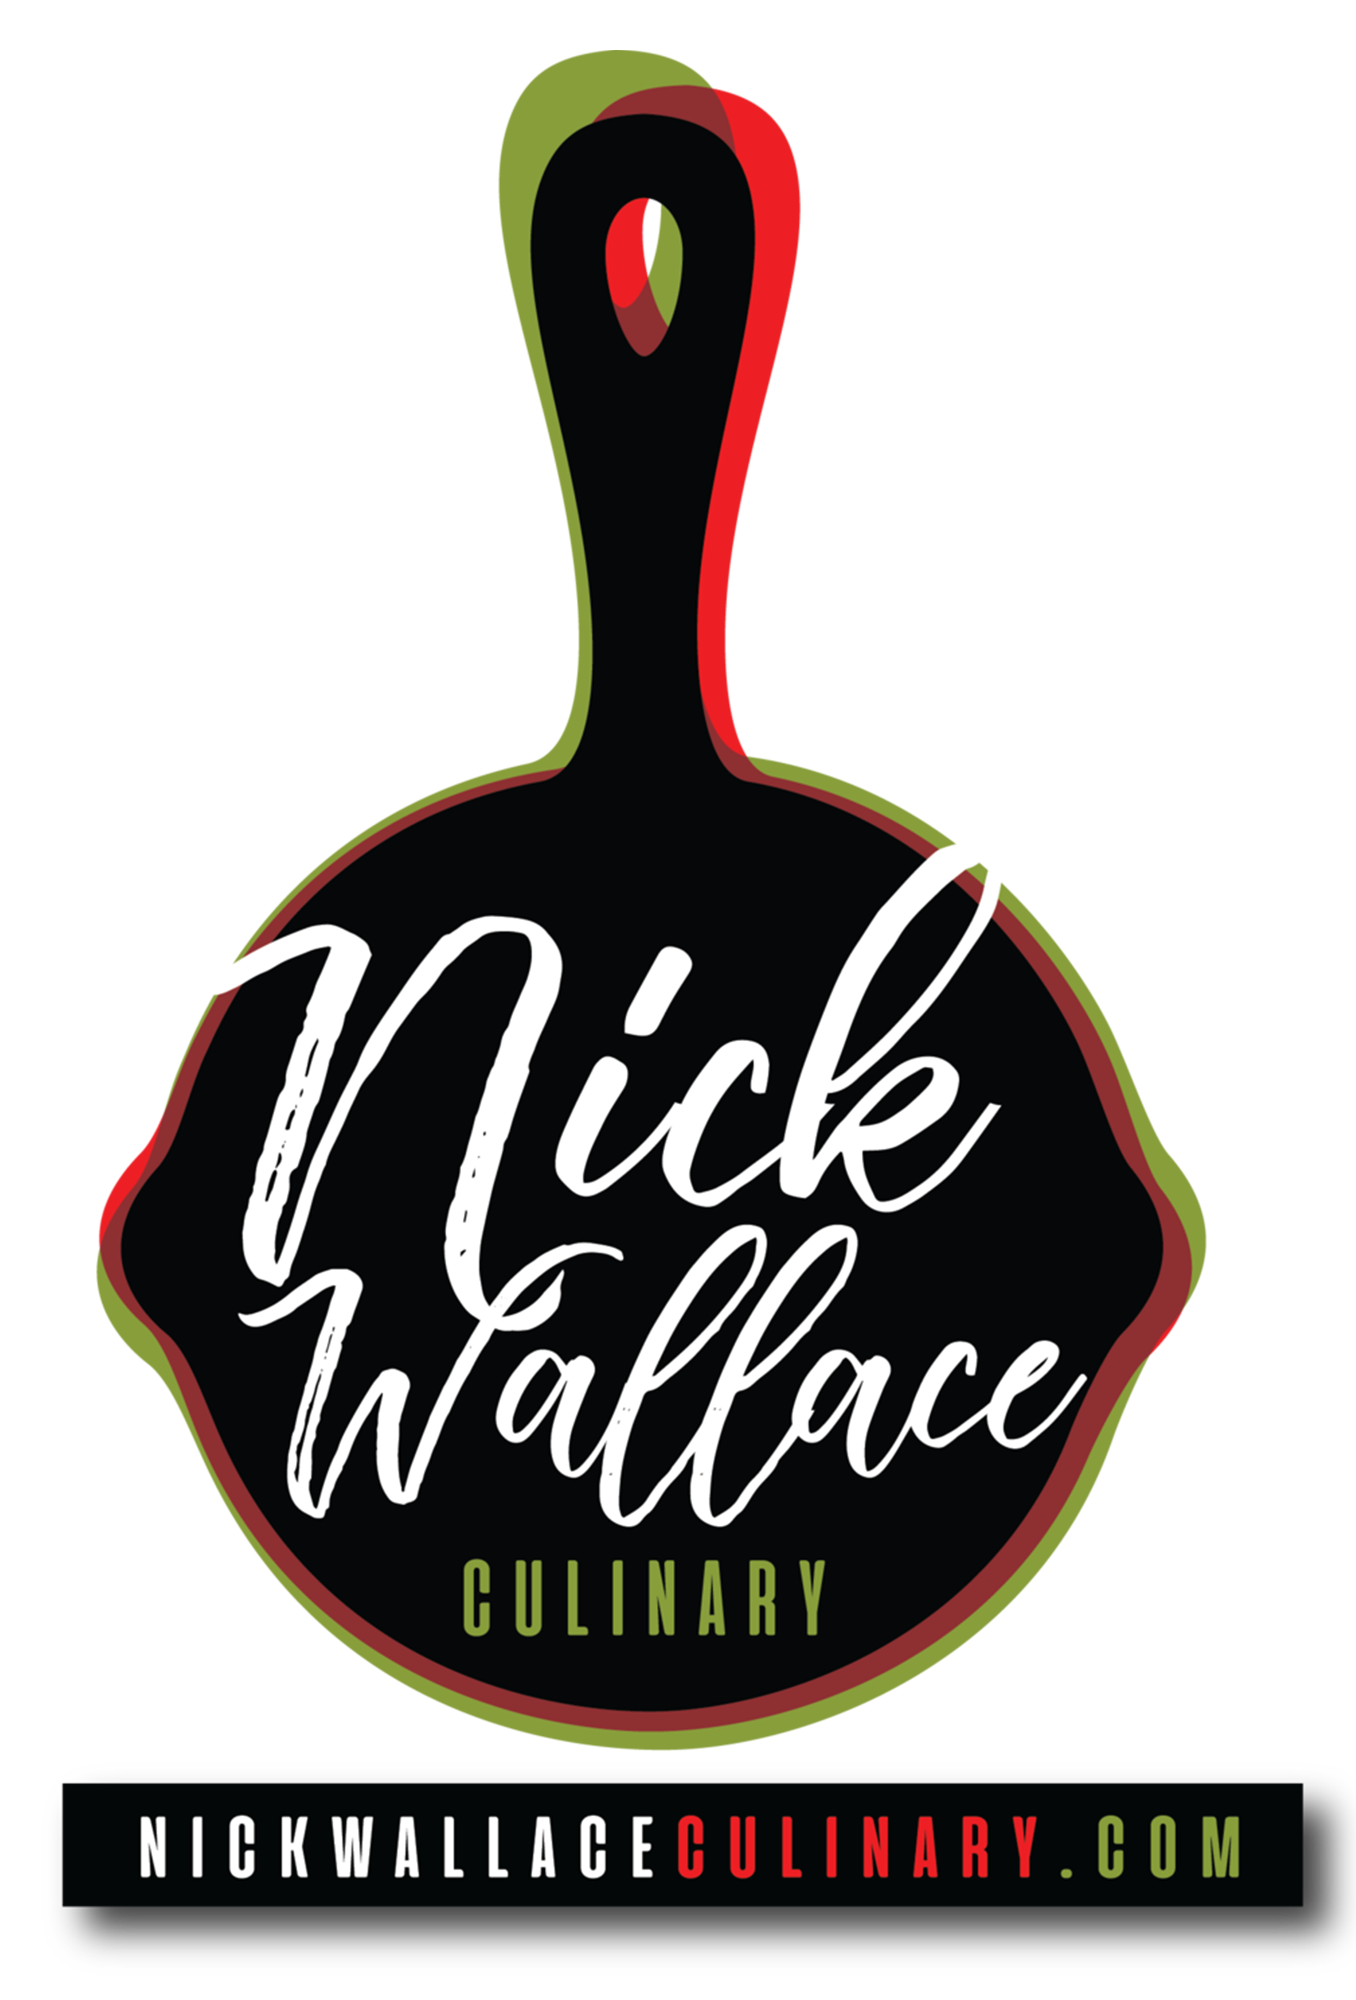 Nick Wallace Culinary